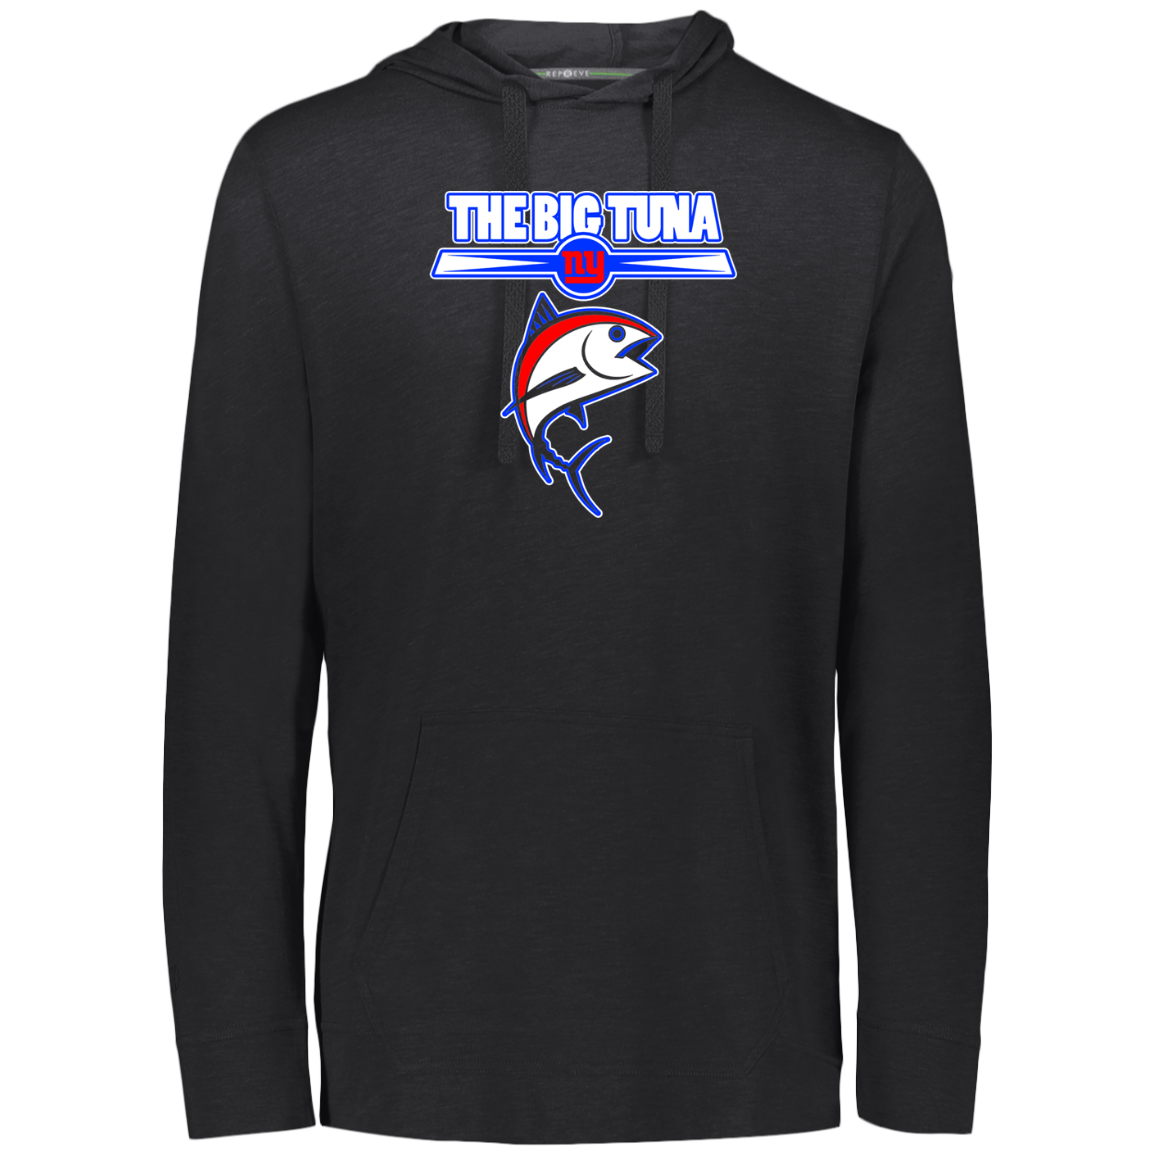 ArtichokeUSA Custom Design. The Big Tuna. Bill Parcell Tribute. NY Giants Fan Art. Eco Triblend T-Shirt Hoodie